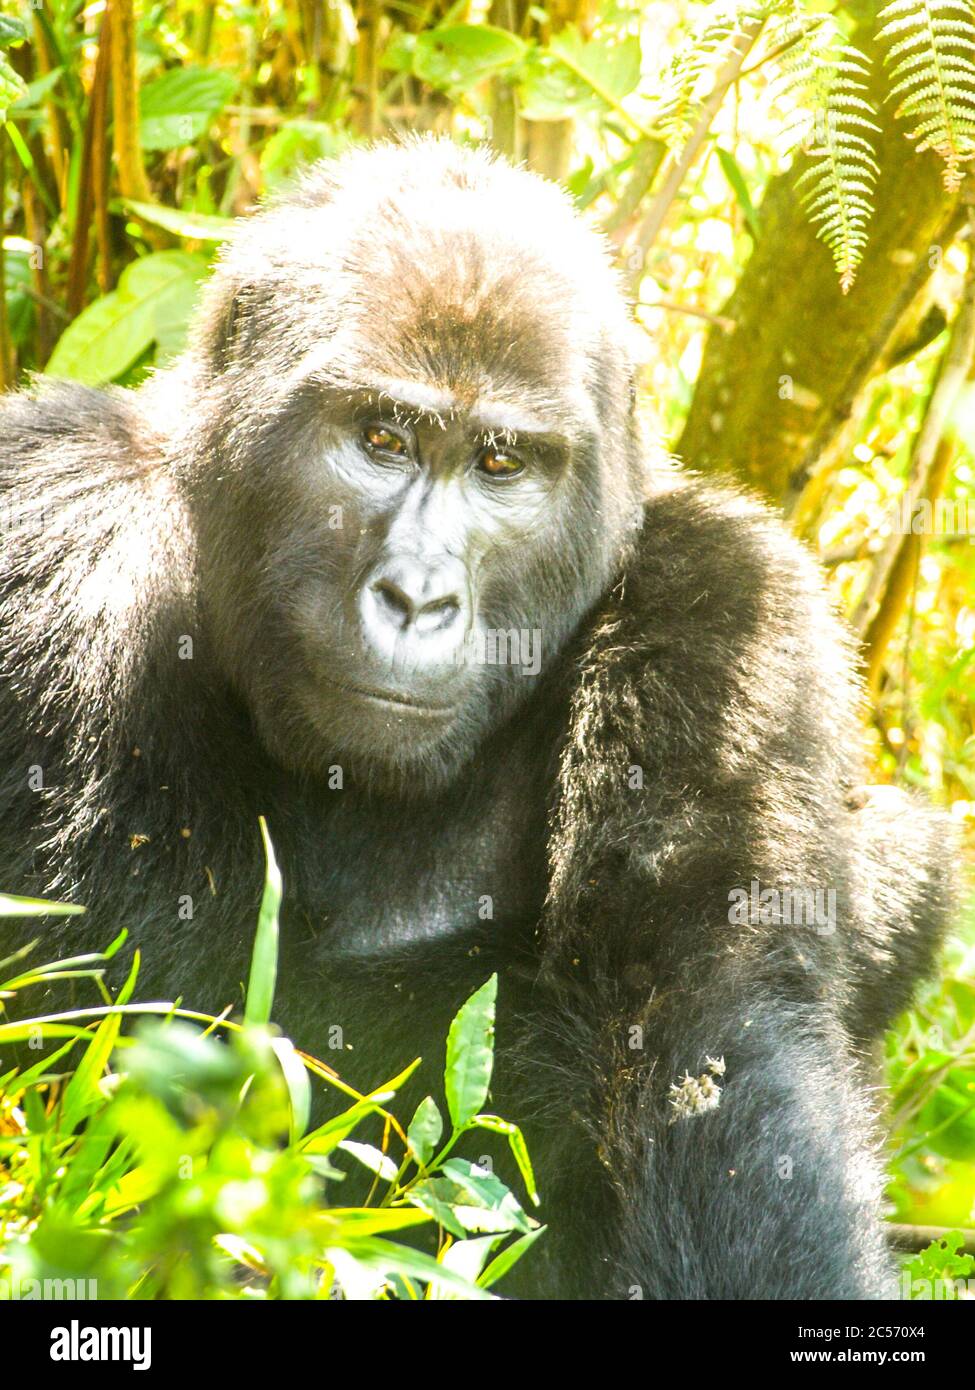 Portrait of adult male eastern gorilla, Gorilla beringei, aka Silverback, in natural habitat. Critically endangered primate. Green jungle forests of Bwindi Impenetrable National Park, Uganda, Africa. Stock Photo